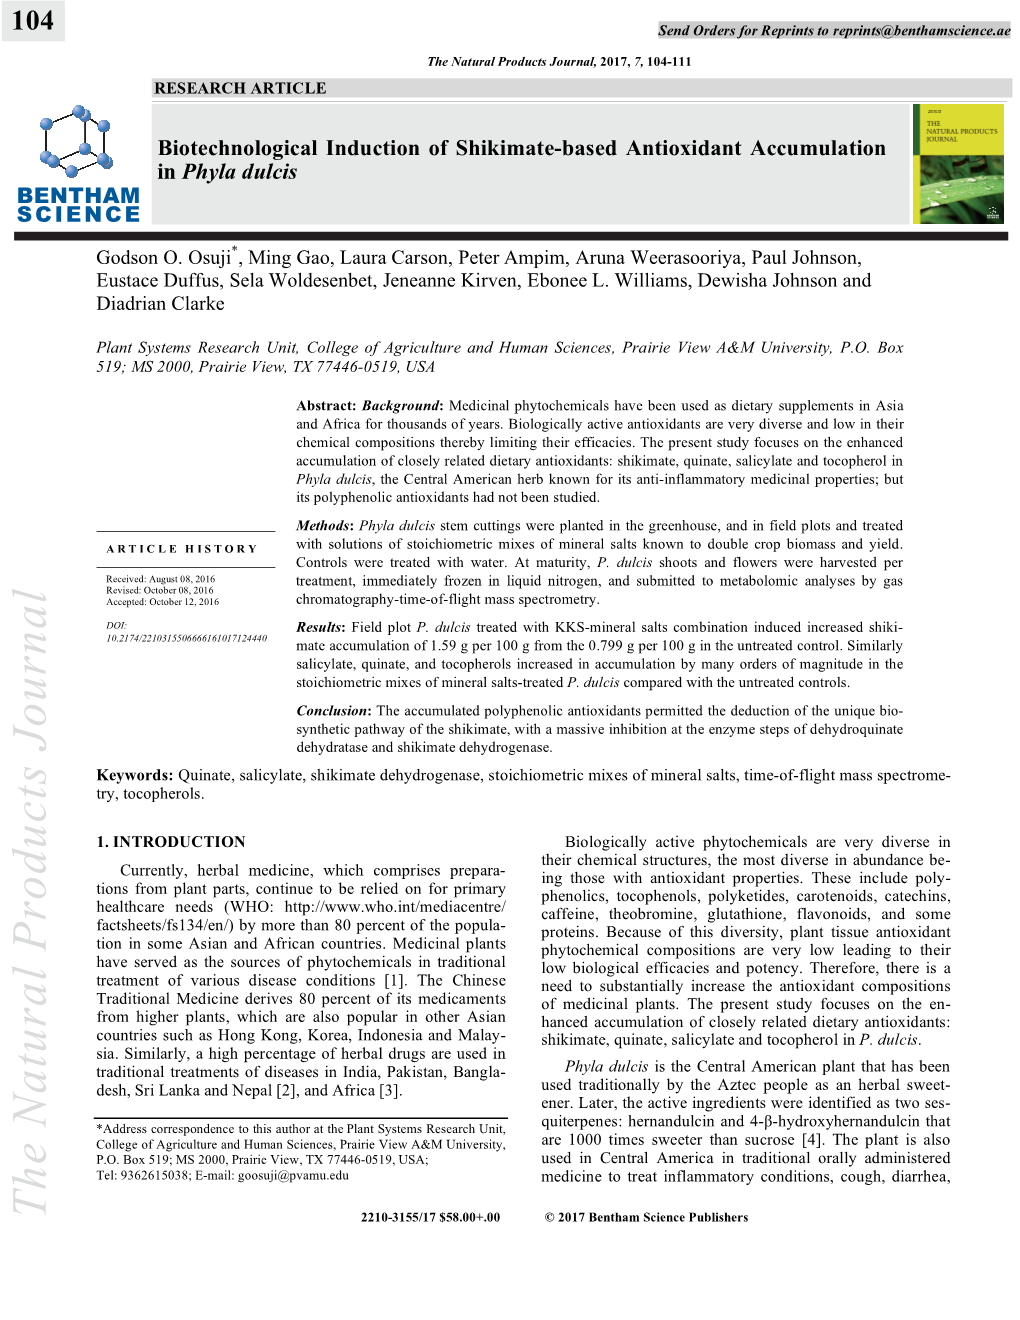 Biotechnological Induction of Shikimate-Based Antioxidant Accumulation in Phyla Dulcis